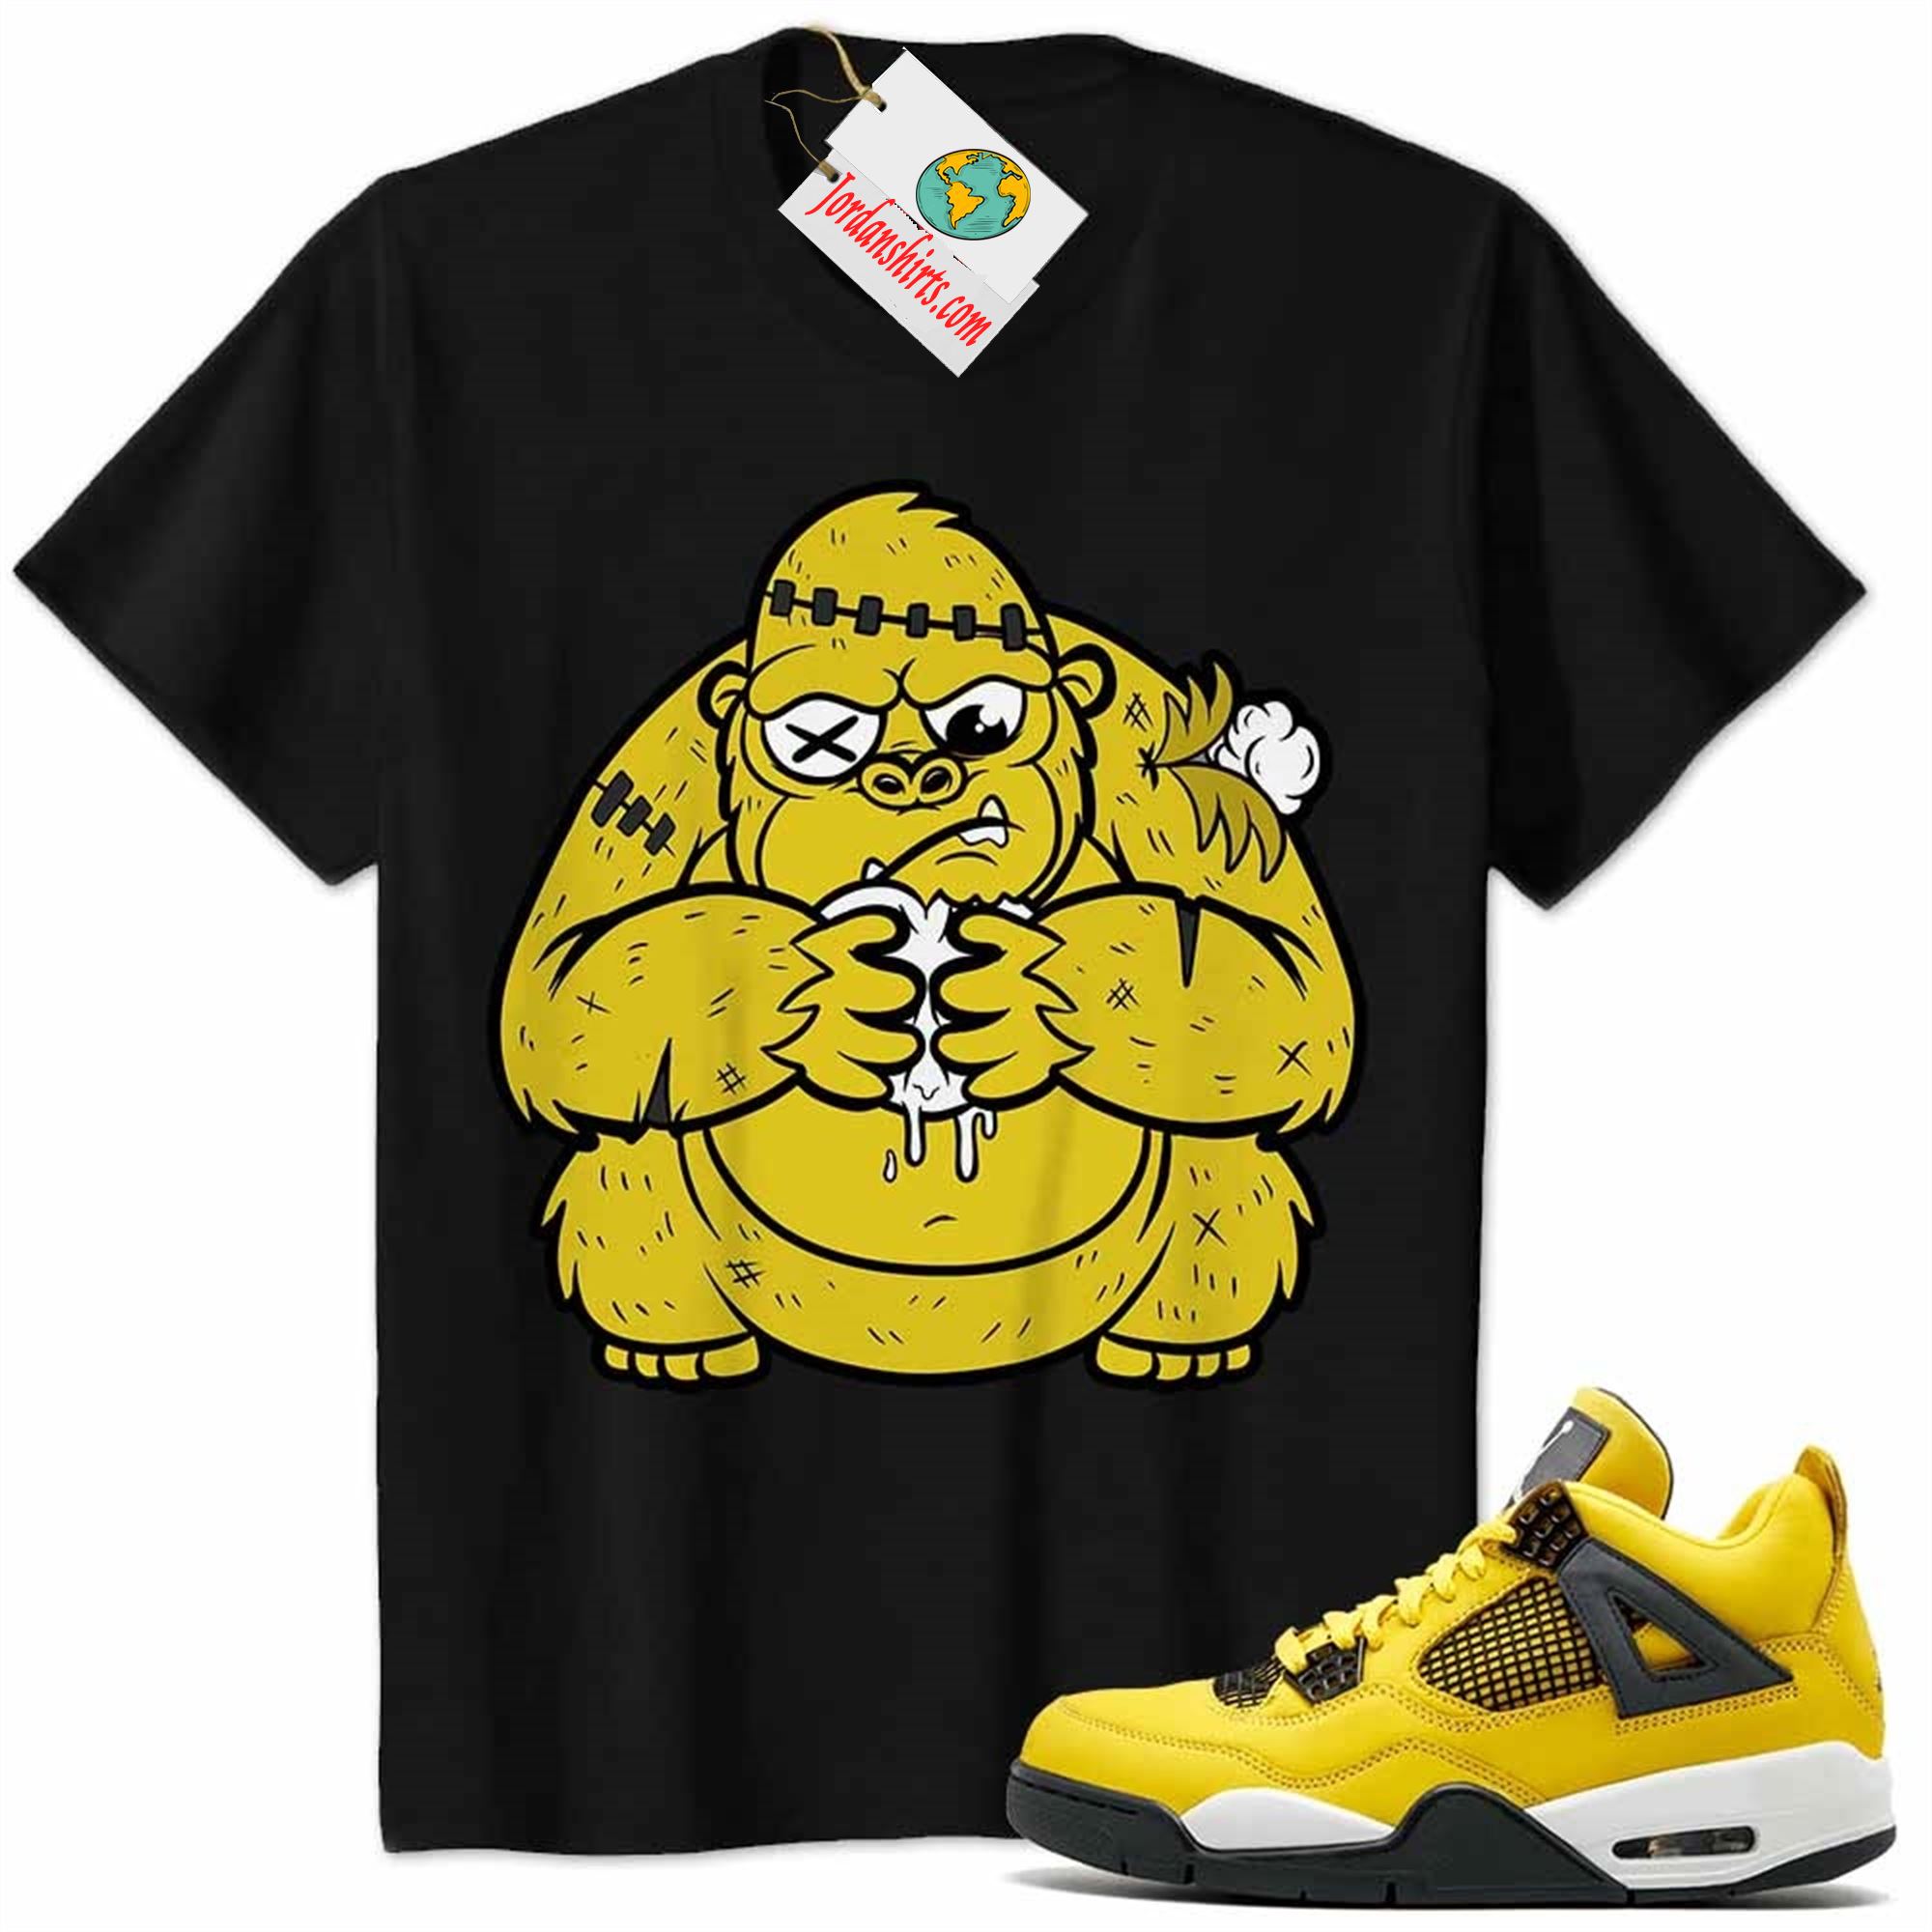 Jordan 4 Shirt, Cute Monkey Broken Heart Black Air Jordan 4 Tour Yellow Lightning 4s Full Size Up To 5xl